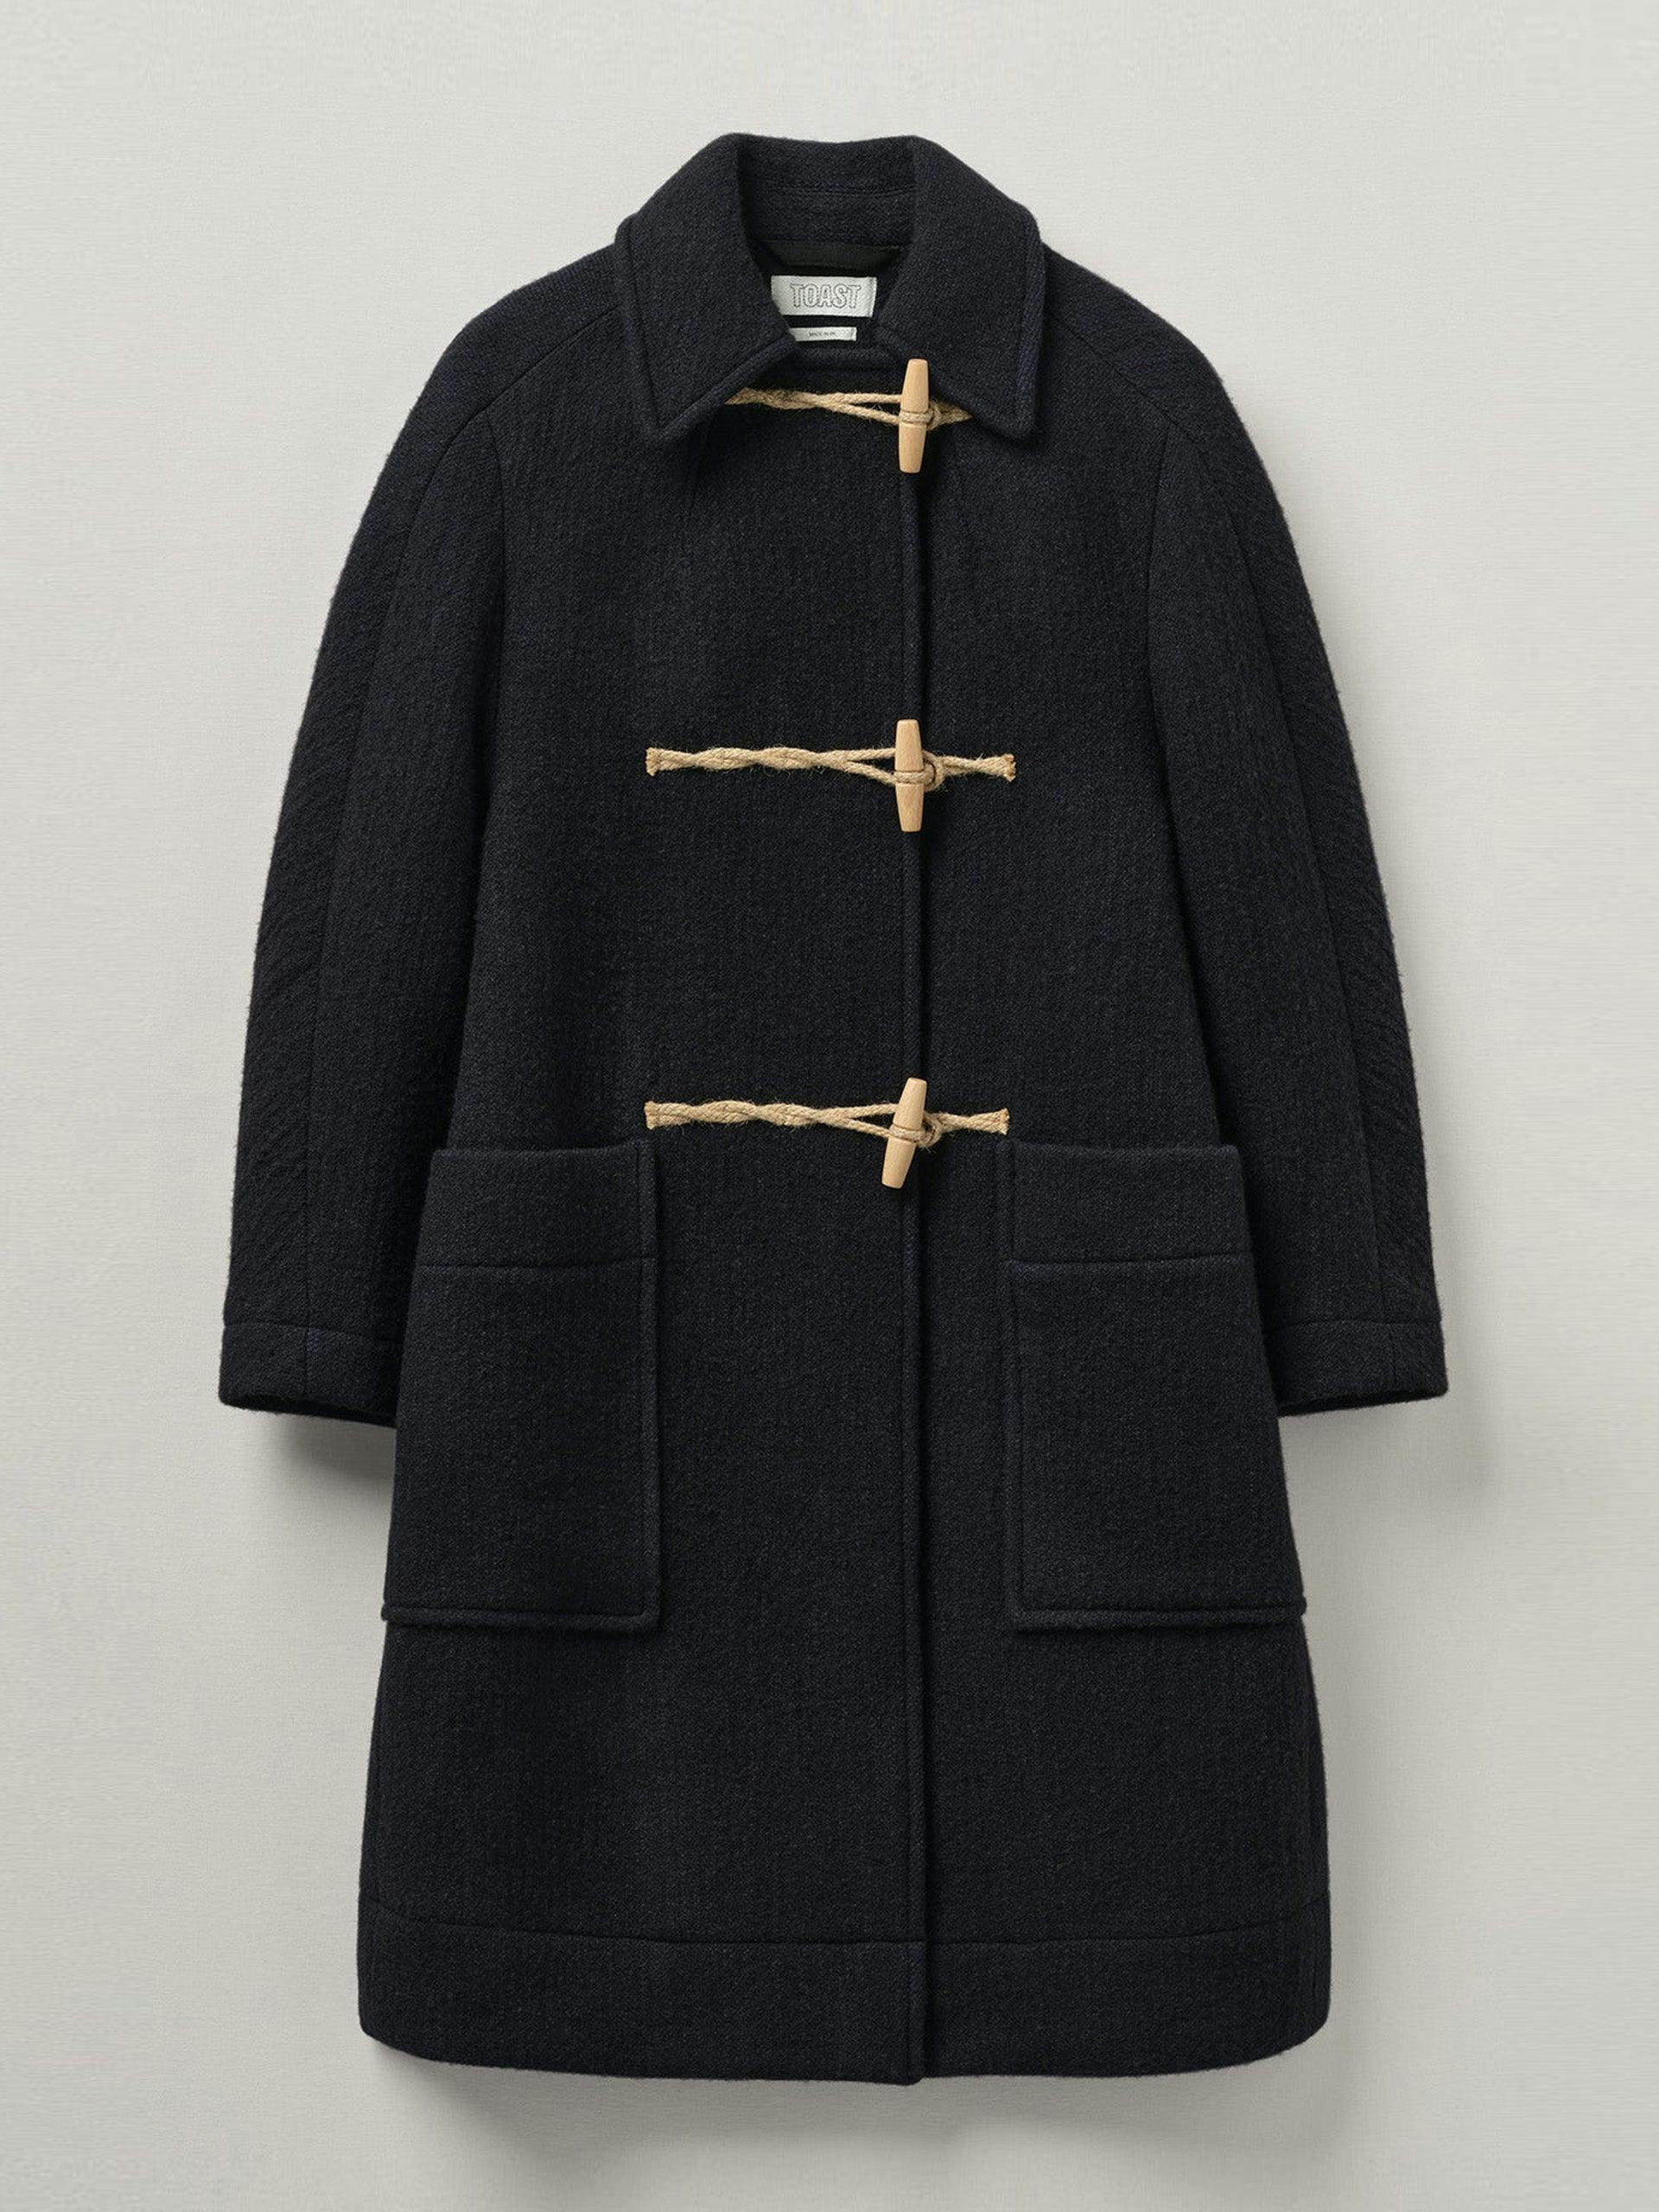 Textured duffle coat